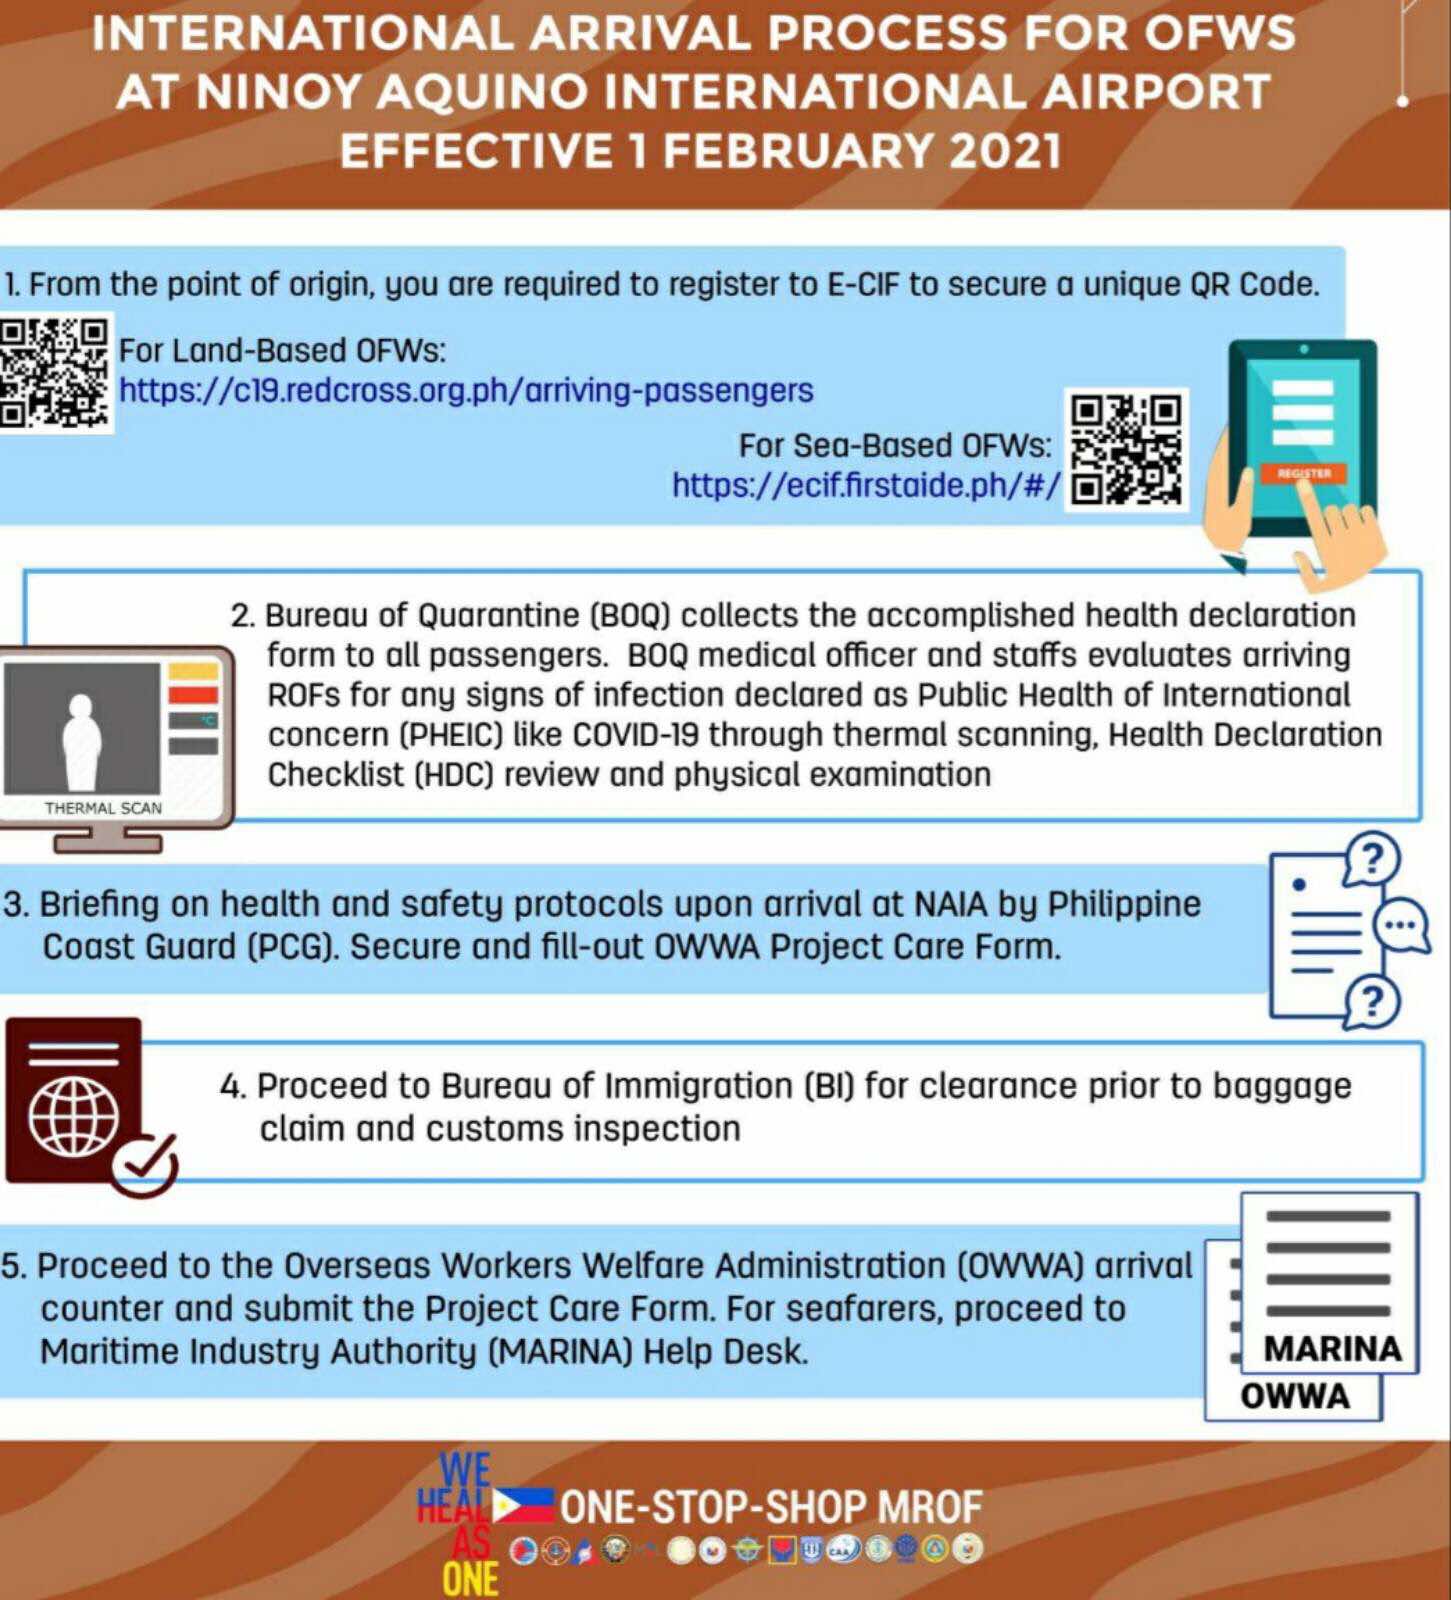 International Arrival Process for OFWs at Ninoy Aquino International Airport (NAIA) - effective February 1, 2021